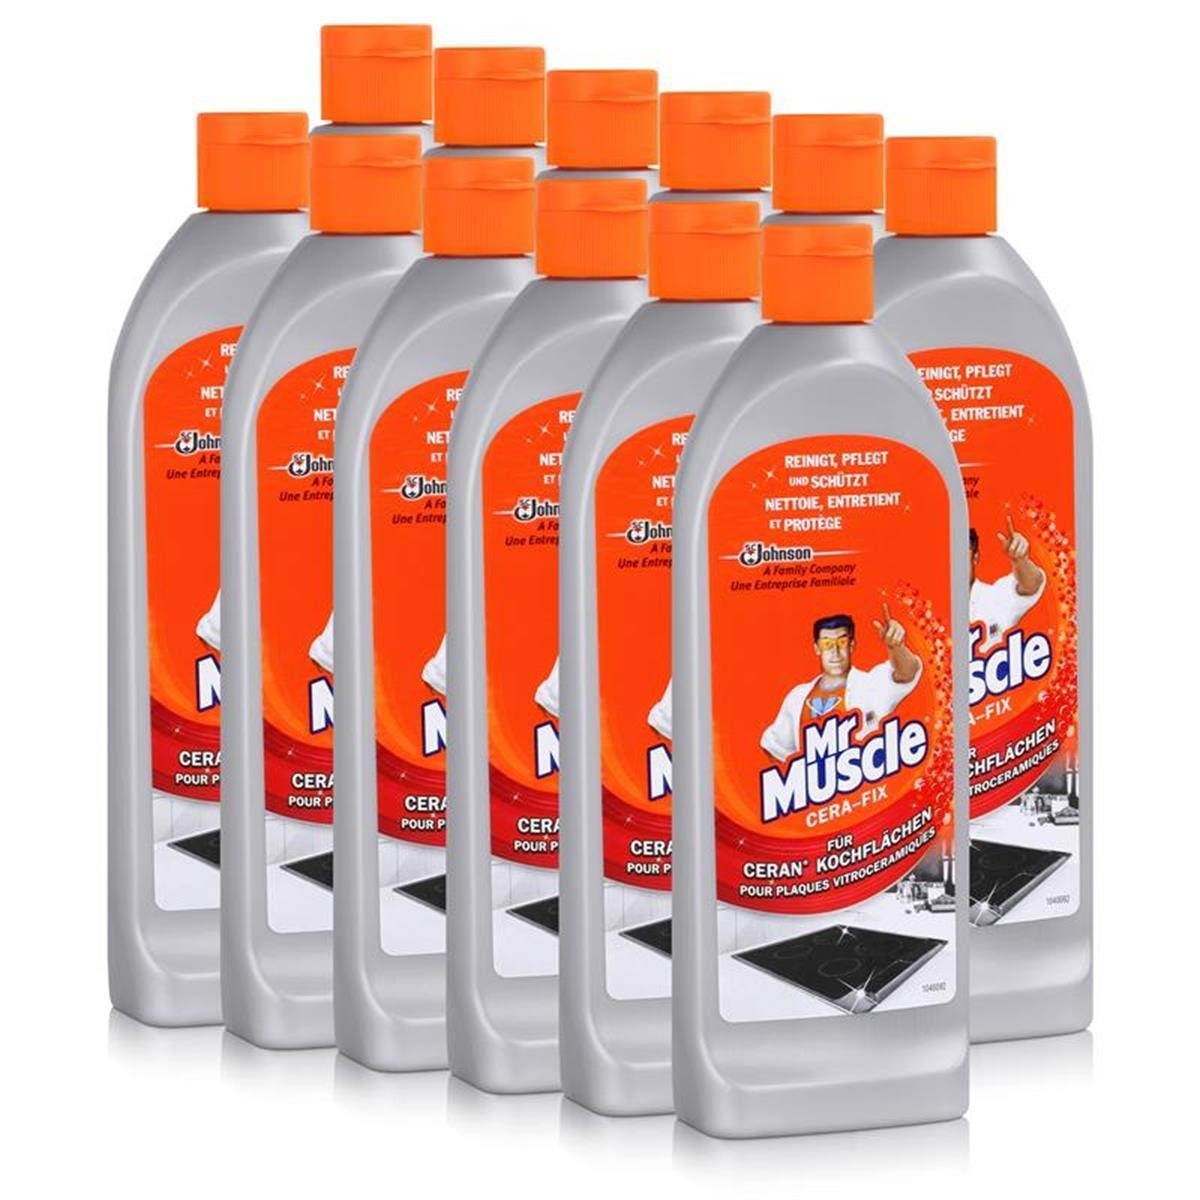 Mr Muscle Mr Muscle Cera-fix Glaskeramik- Ceran-Reiniger 200ml (12er Pack) Küchenreiniger